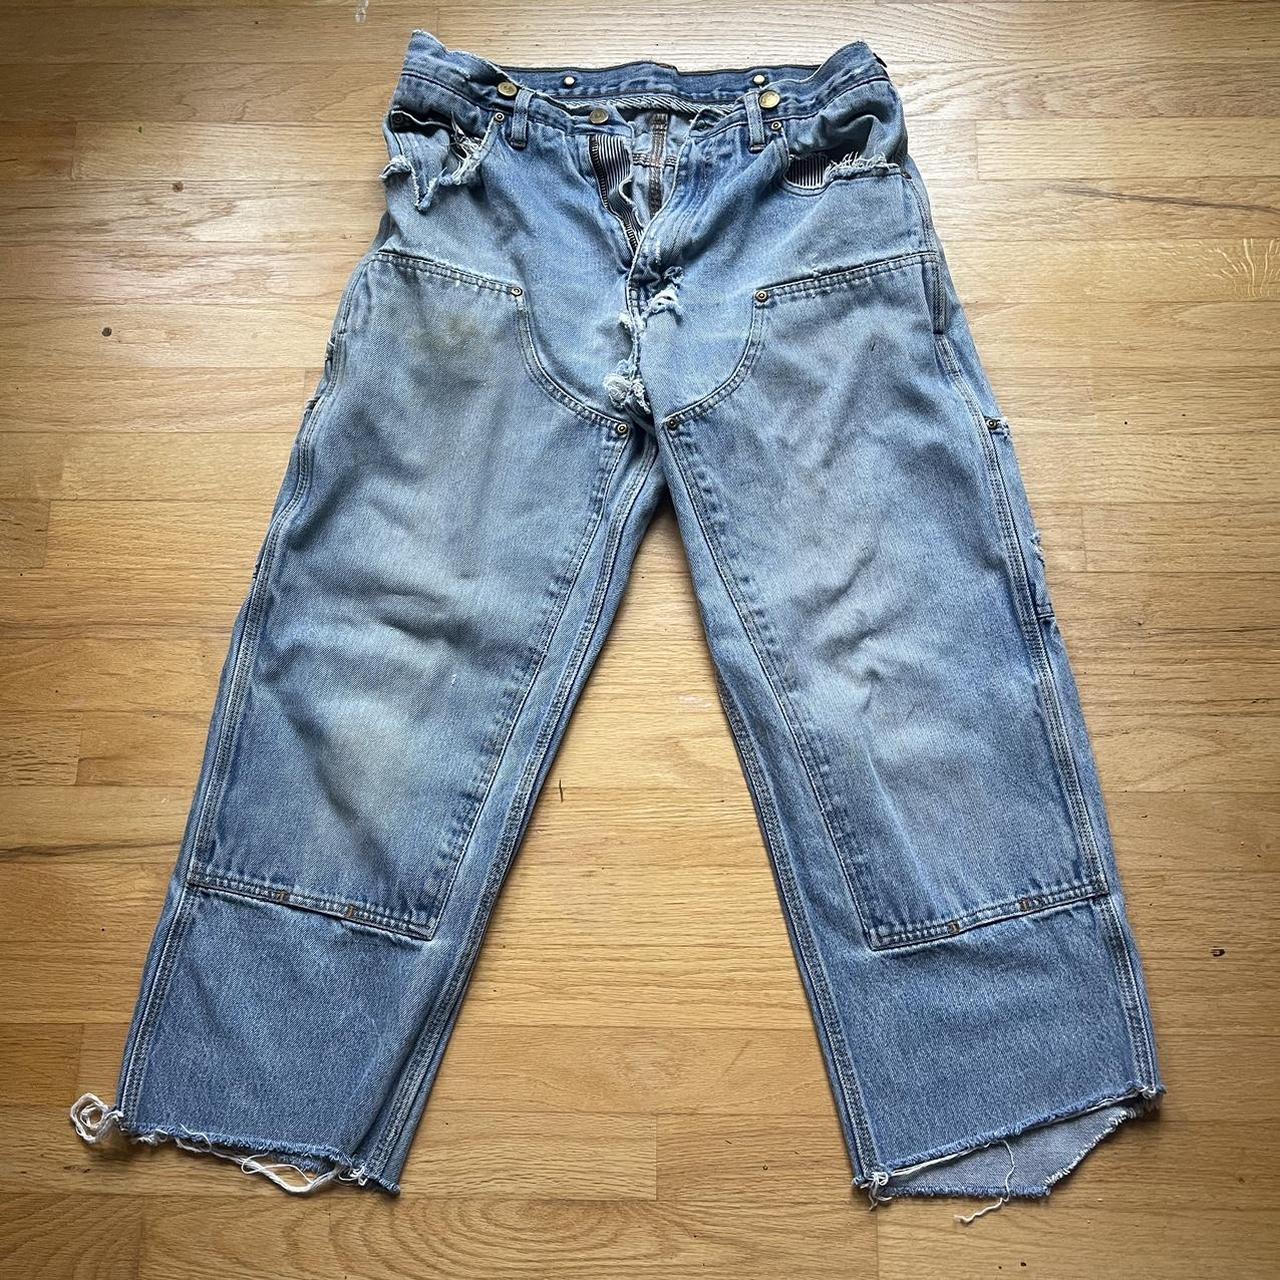 Mens 46/40 carhartt pants #mens #pants #jeans #carhartt - Depop